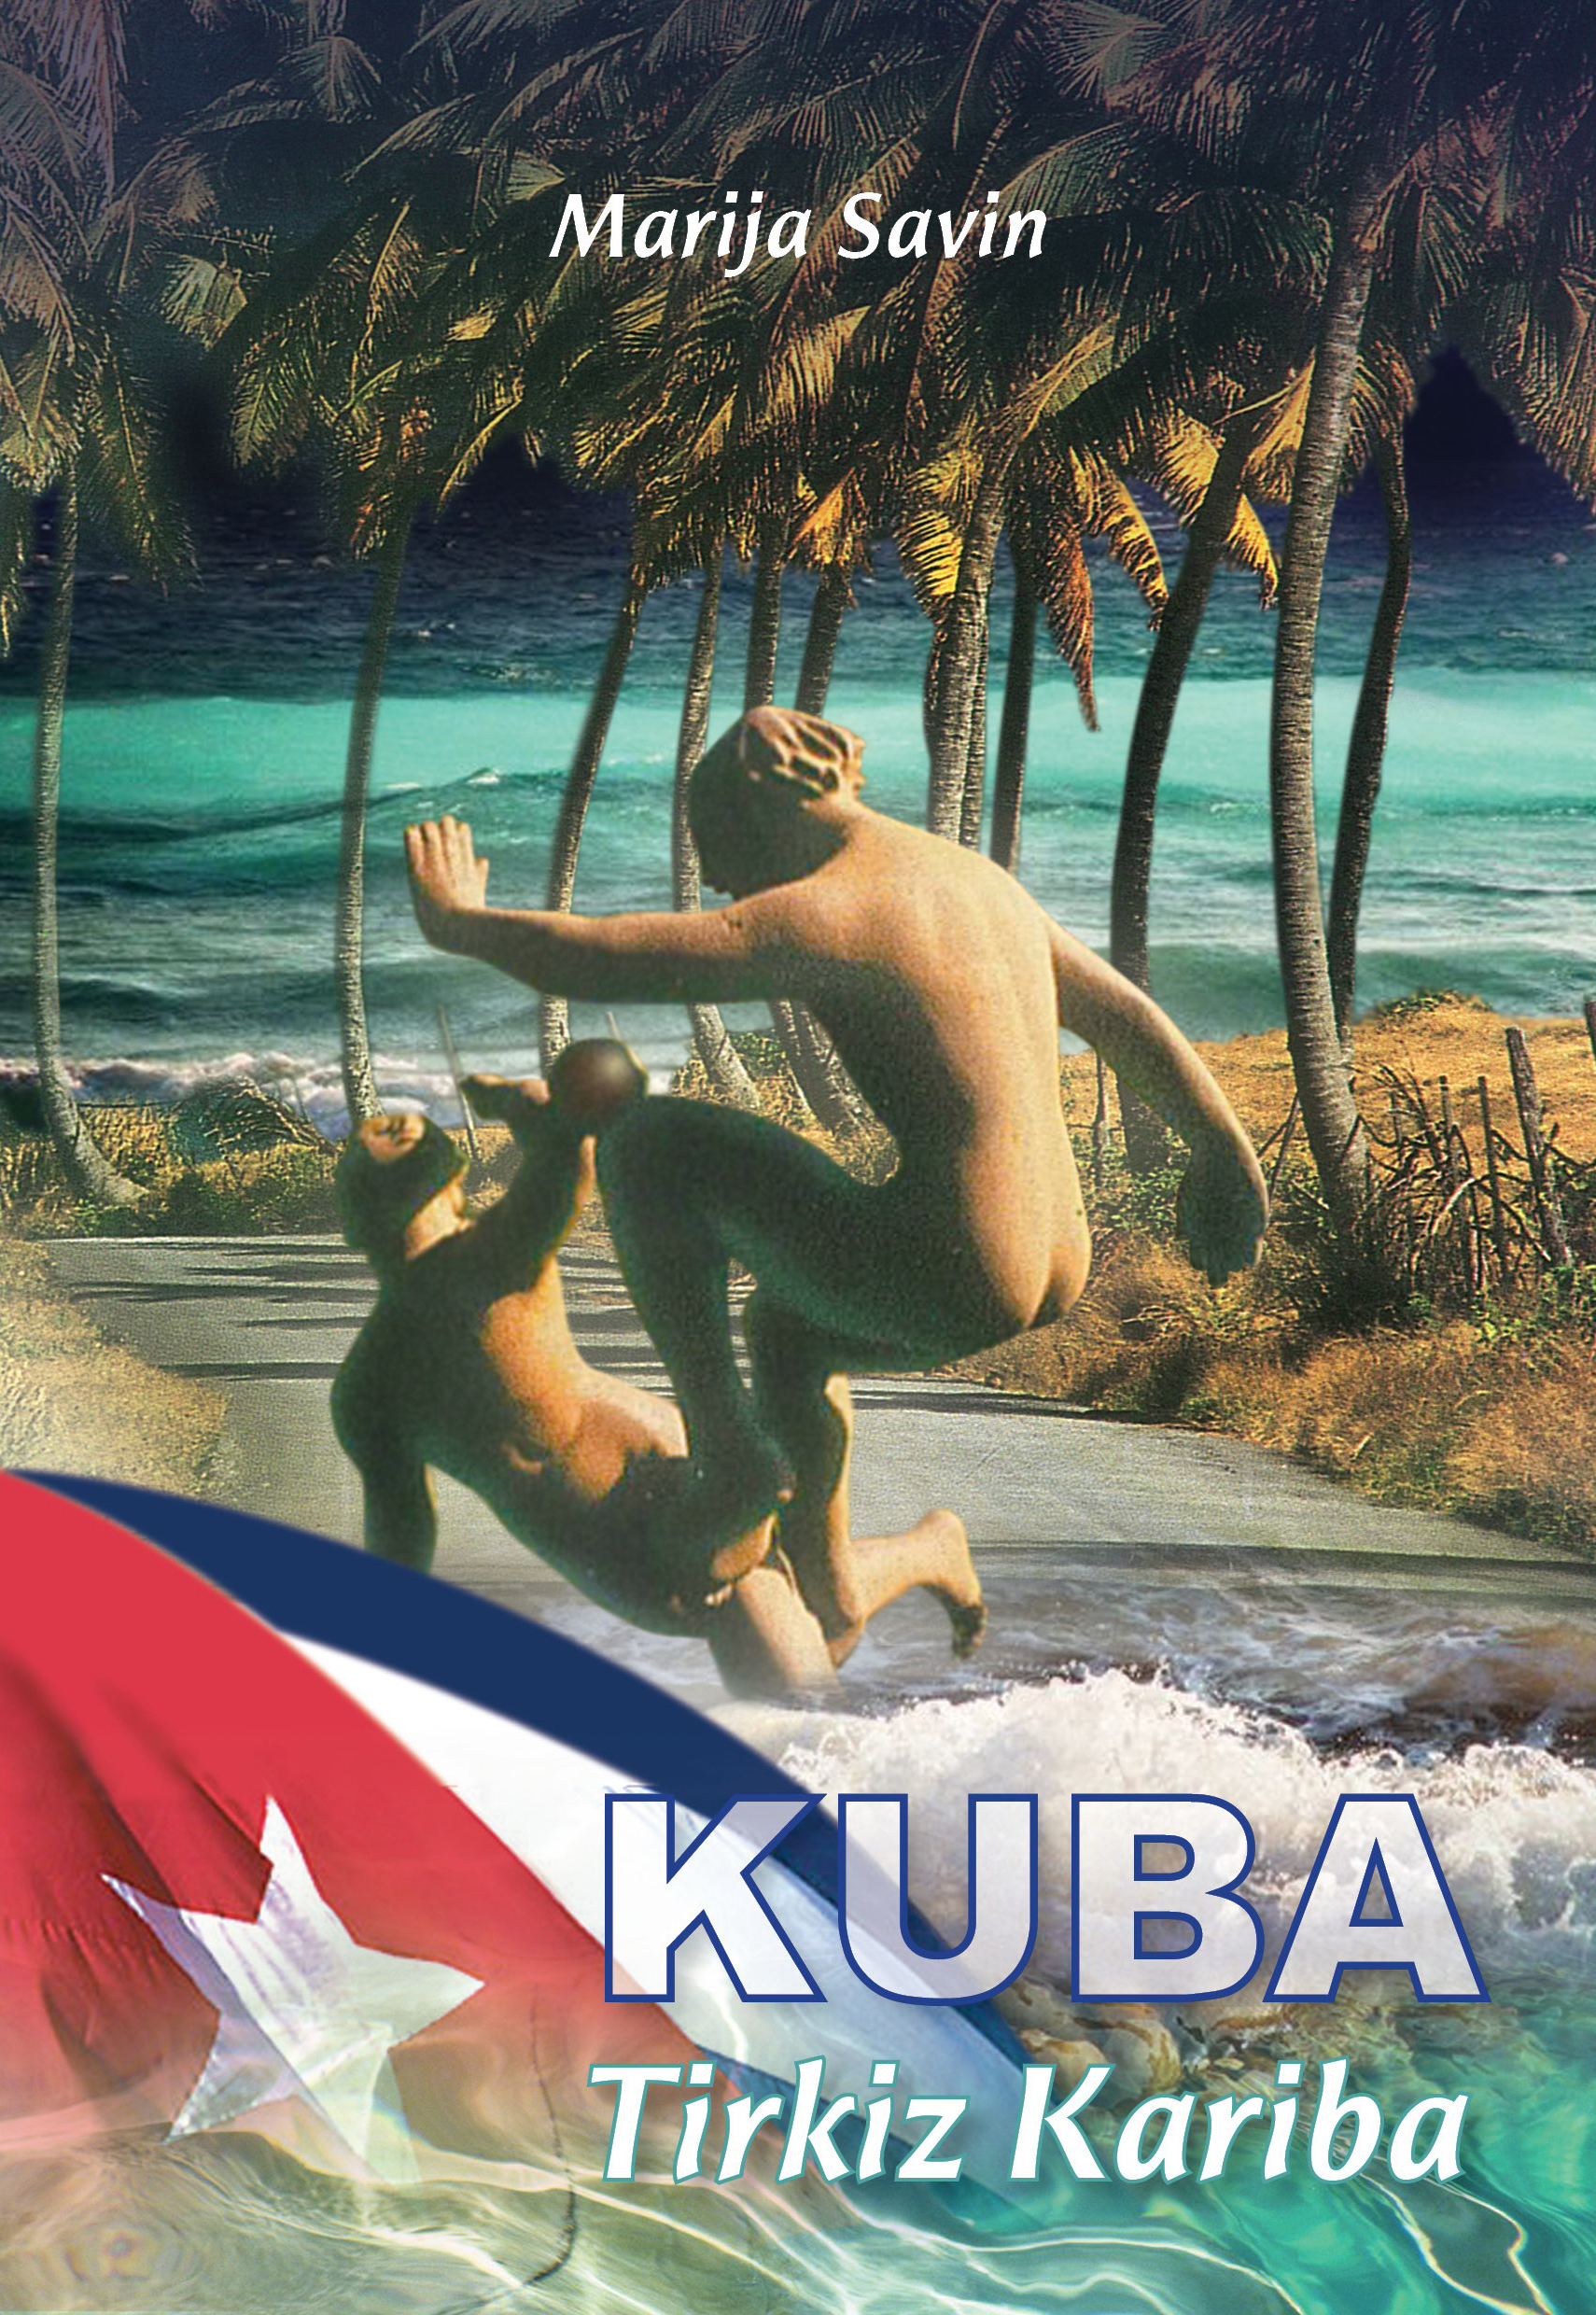 Kuba-Tirkiz Kariba